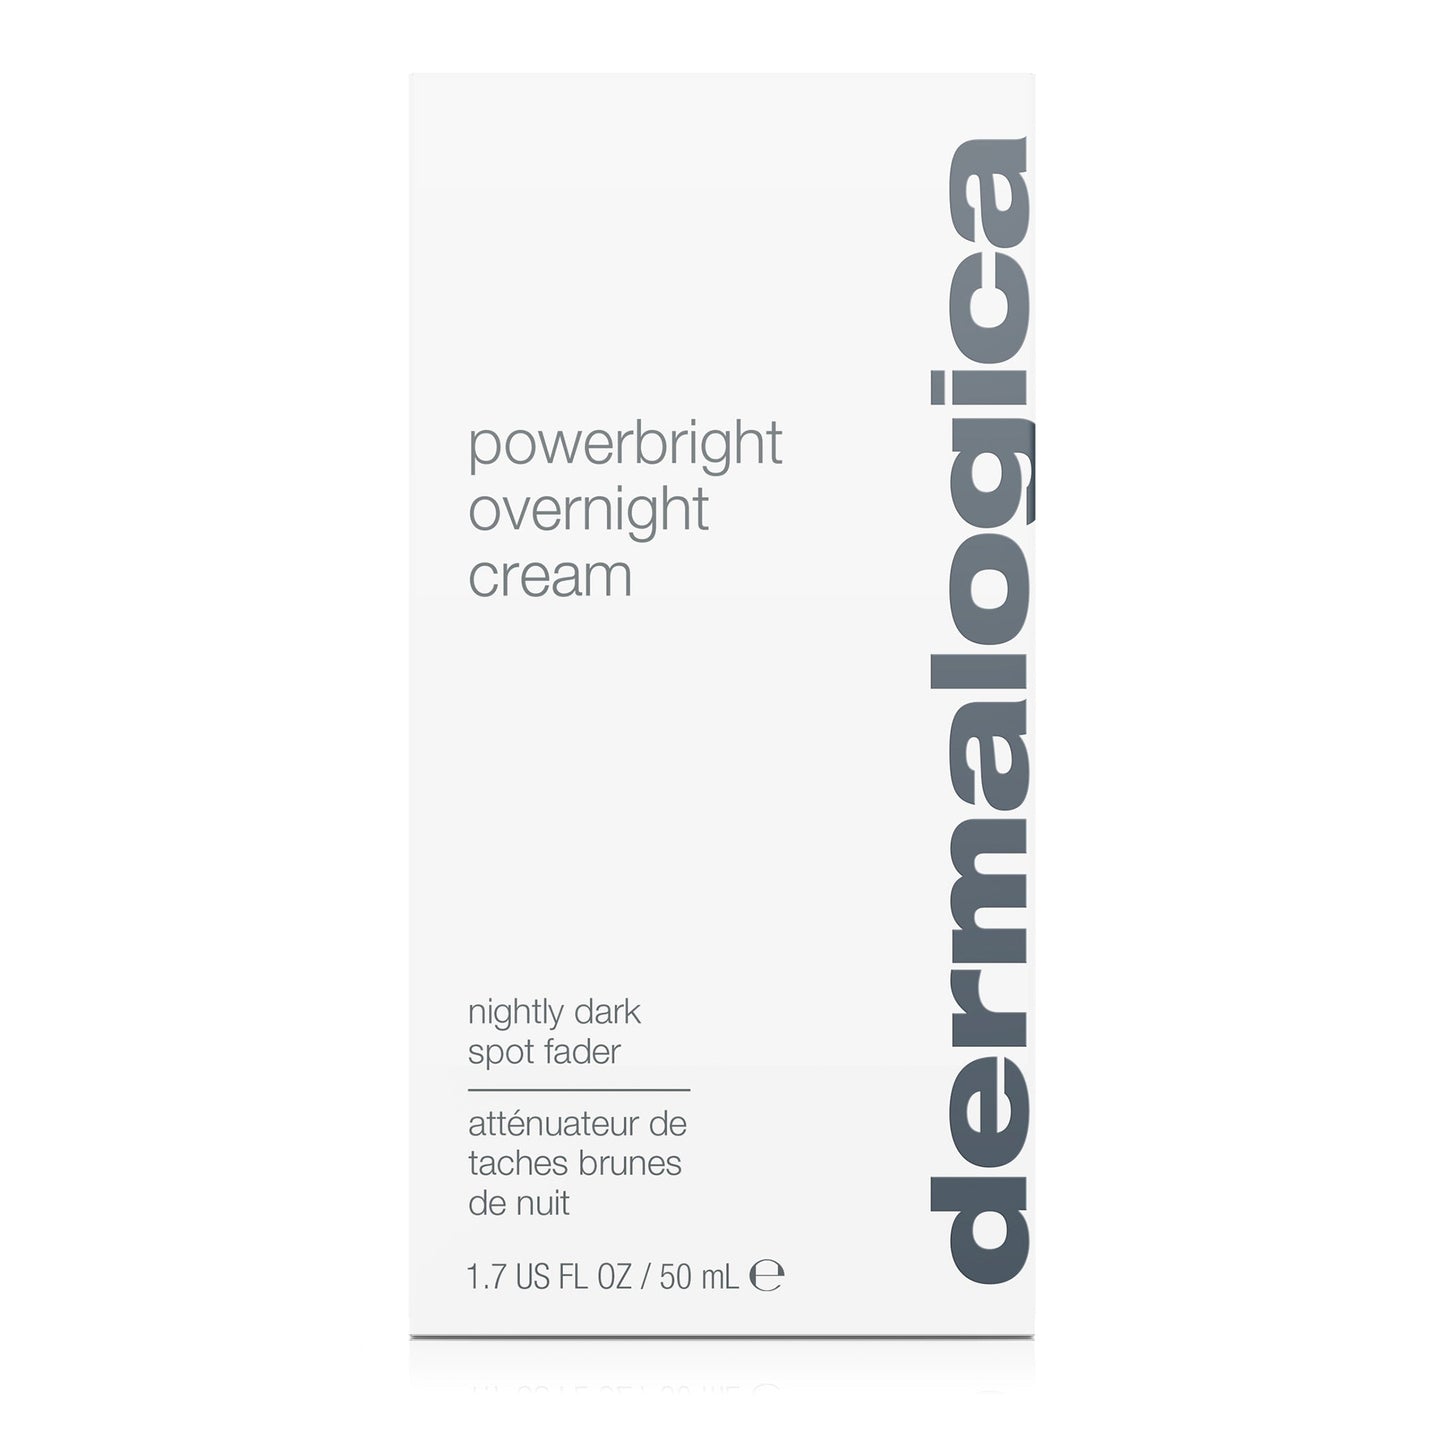 powerbright overnight cream carton